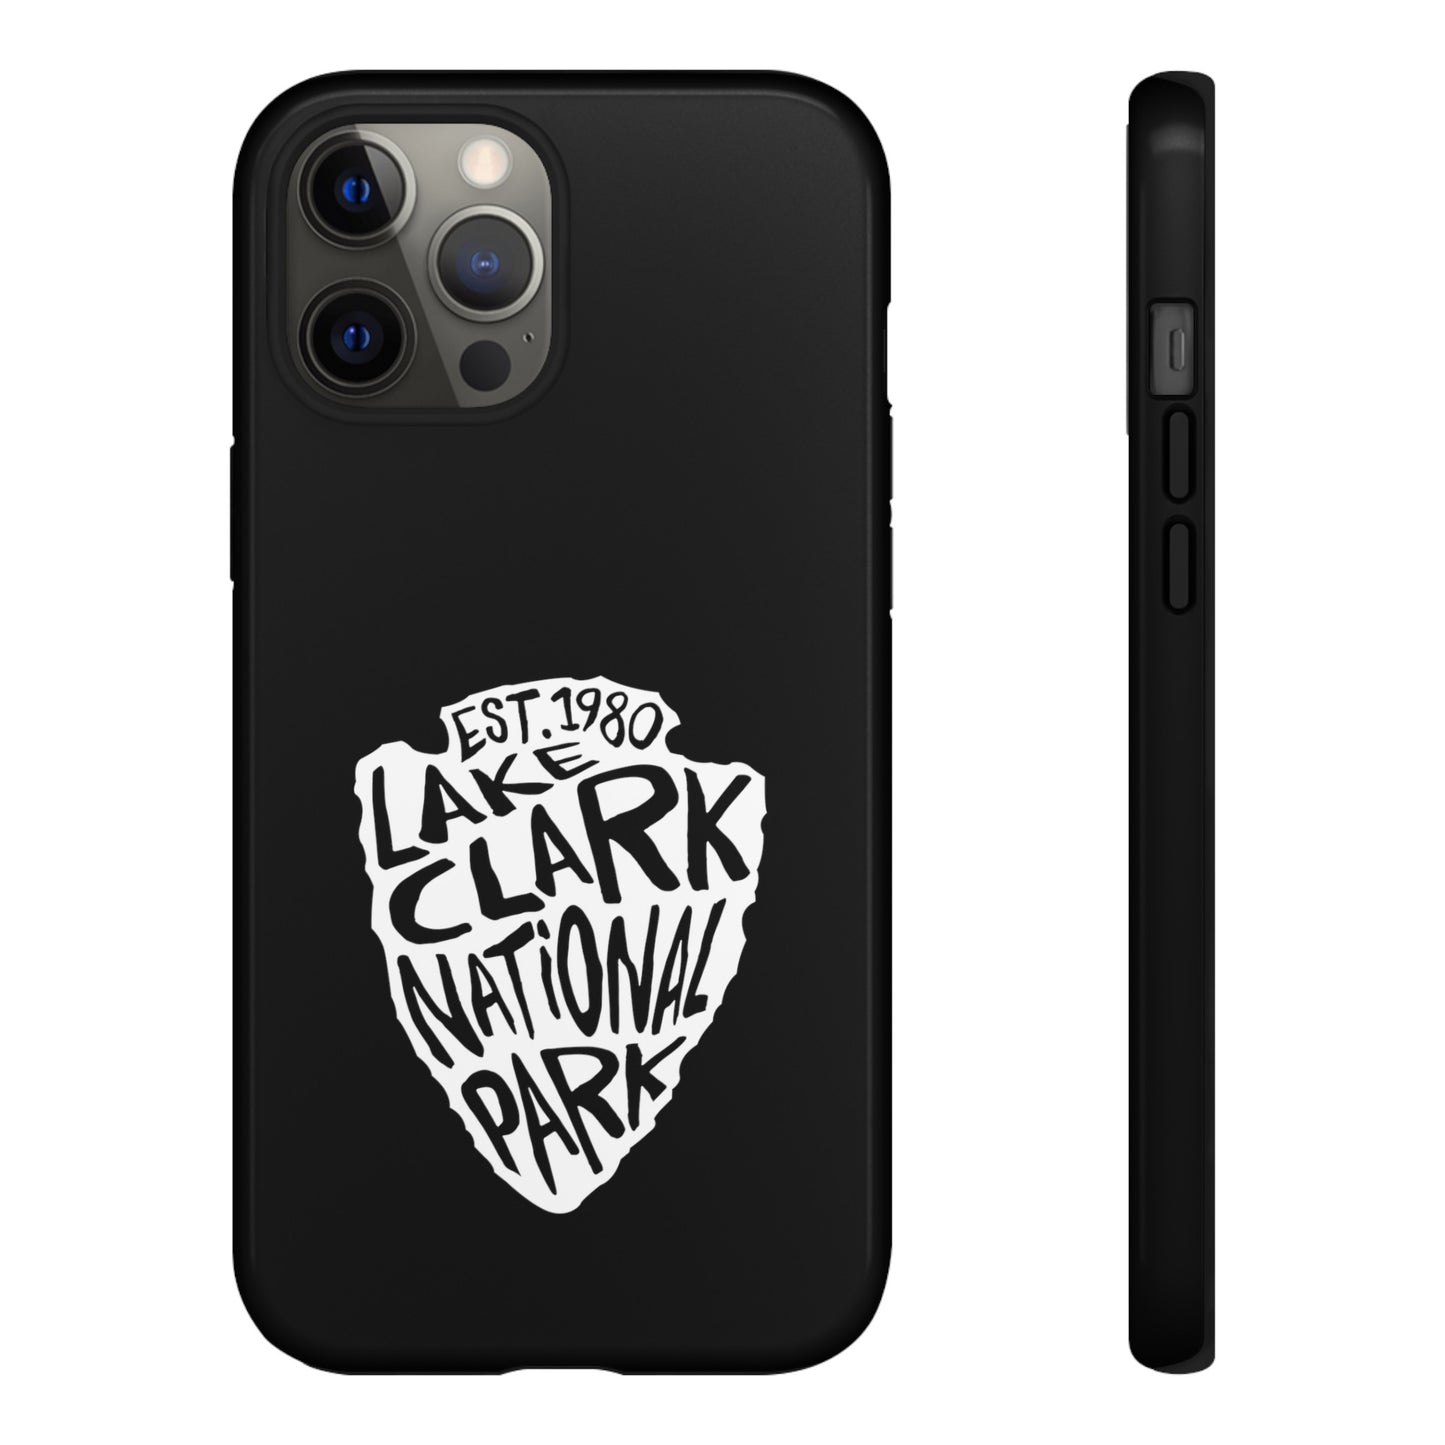 Lake Clark National Park Phone Case - Arrowhead Design